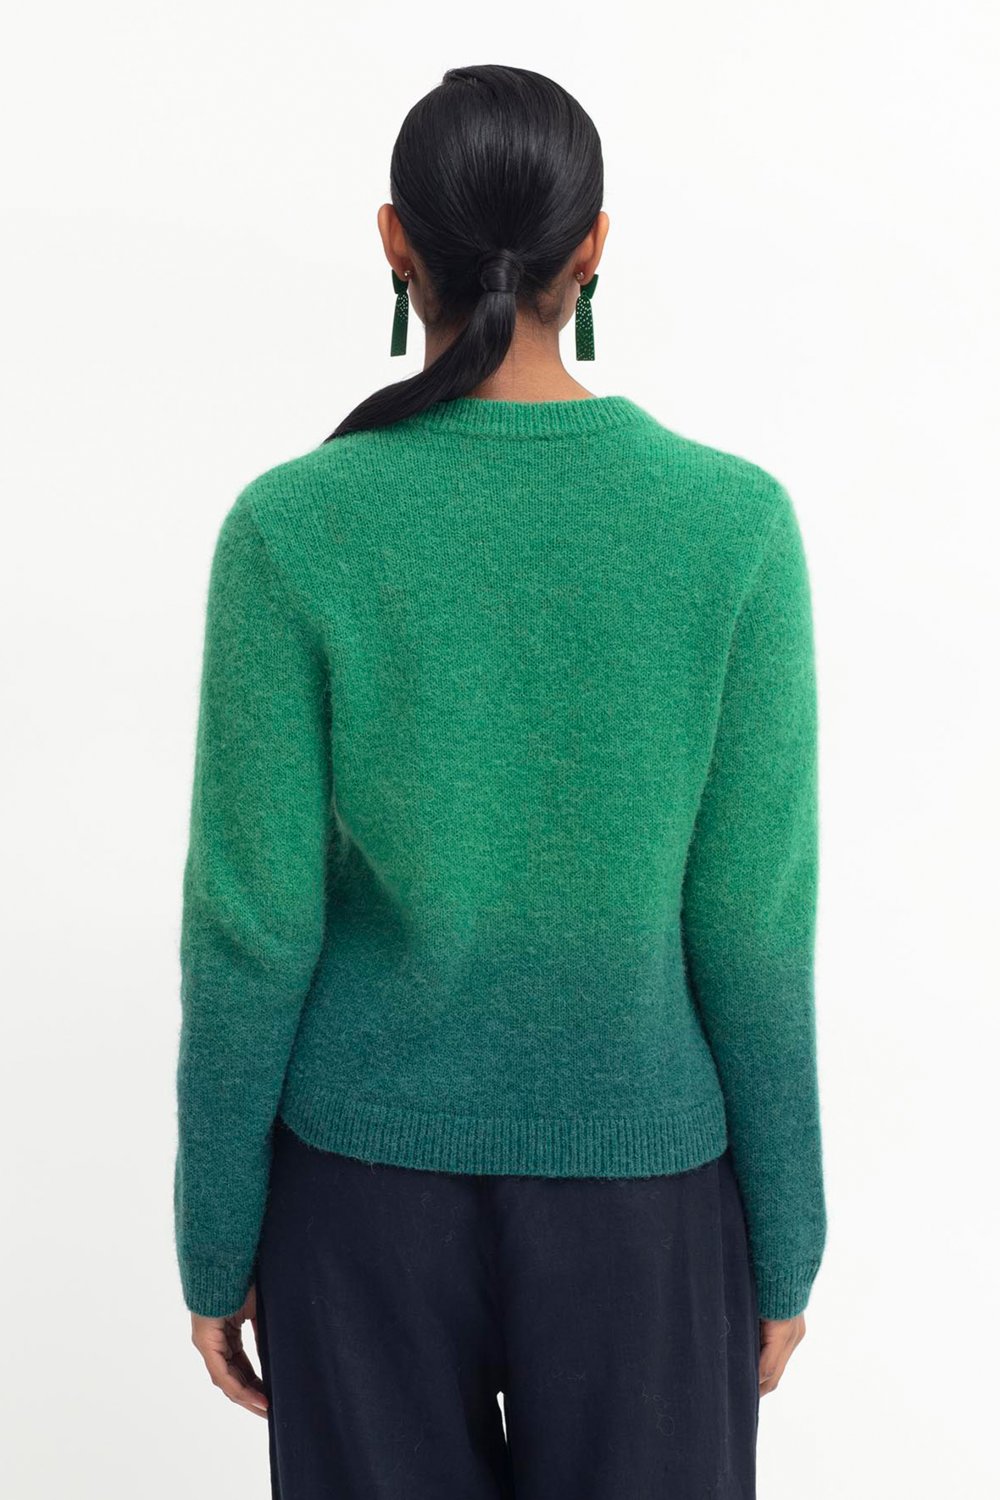 elk-ombre-sweater-green-teal 3